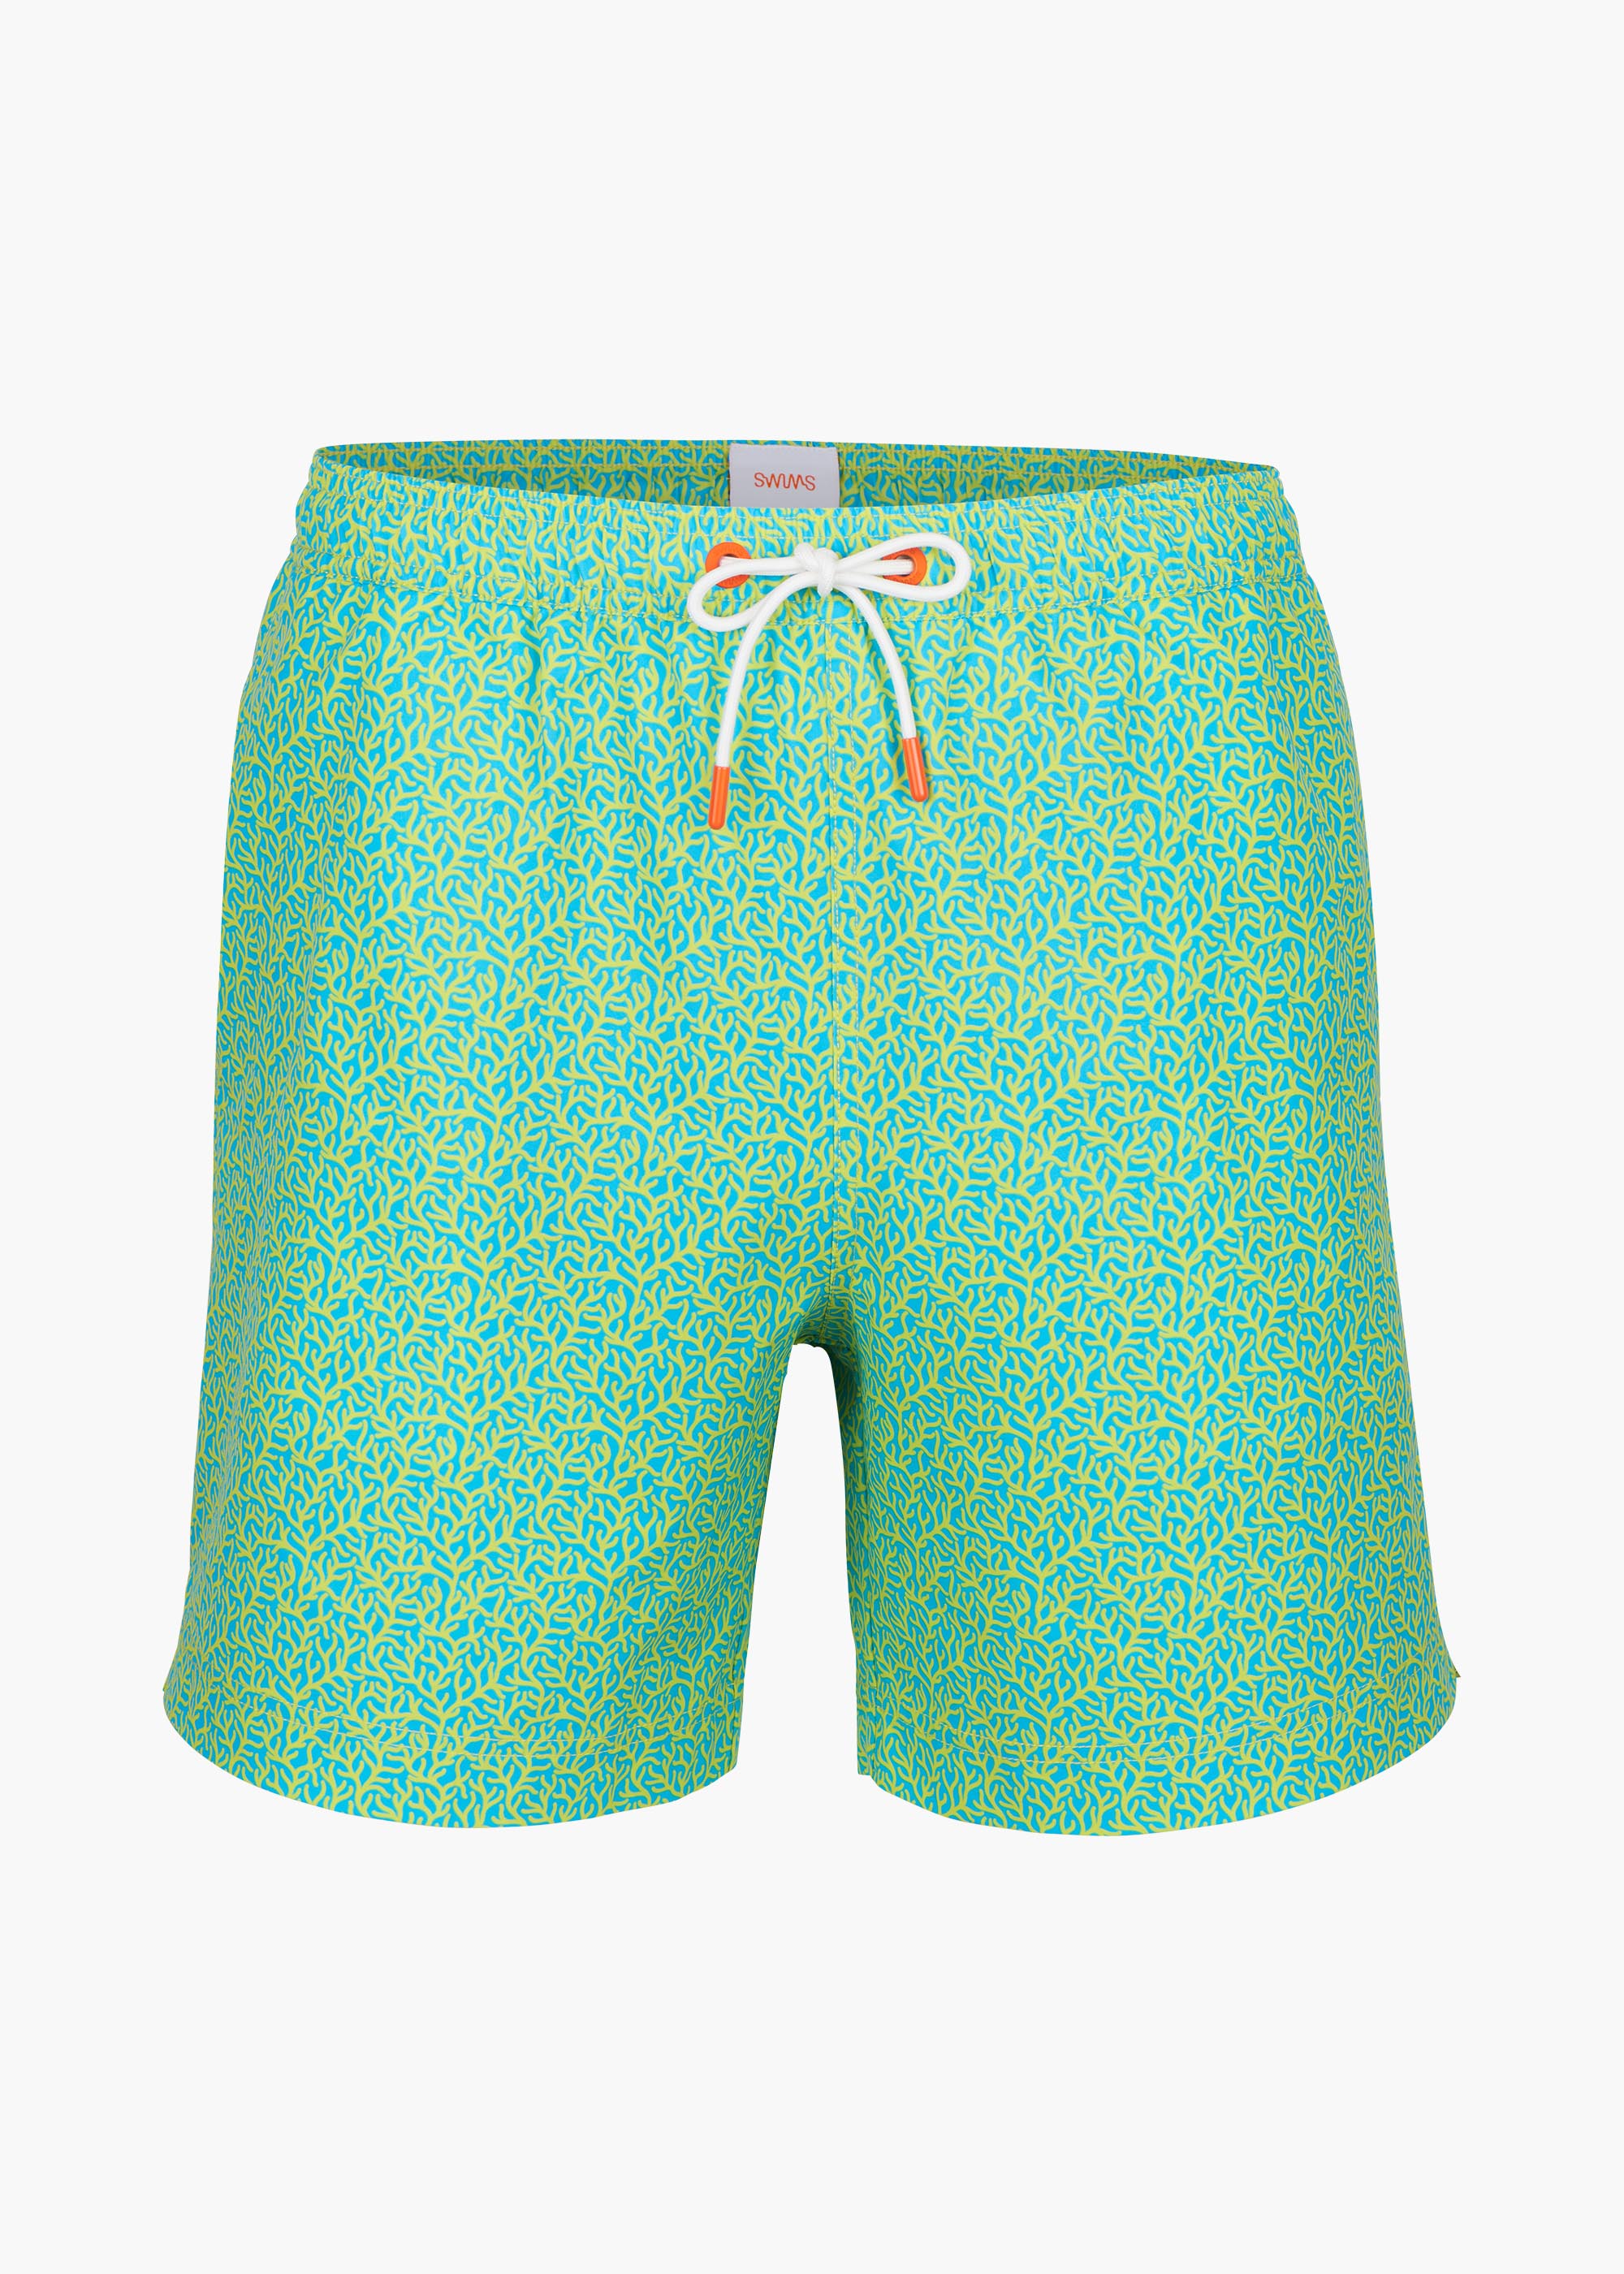 Sol Swim Short (6 ½” inseam) - background::white,variant::Coral Citron